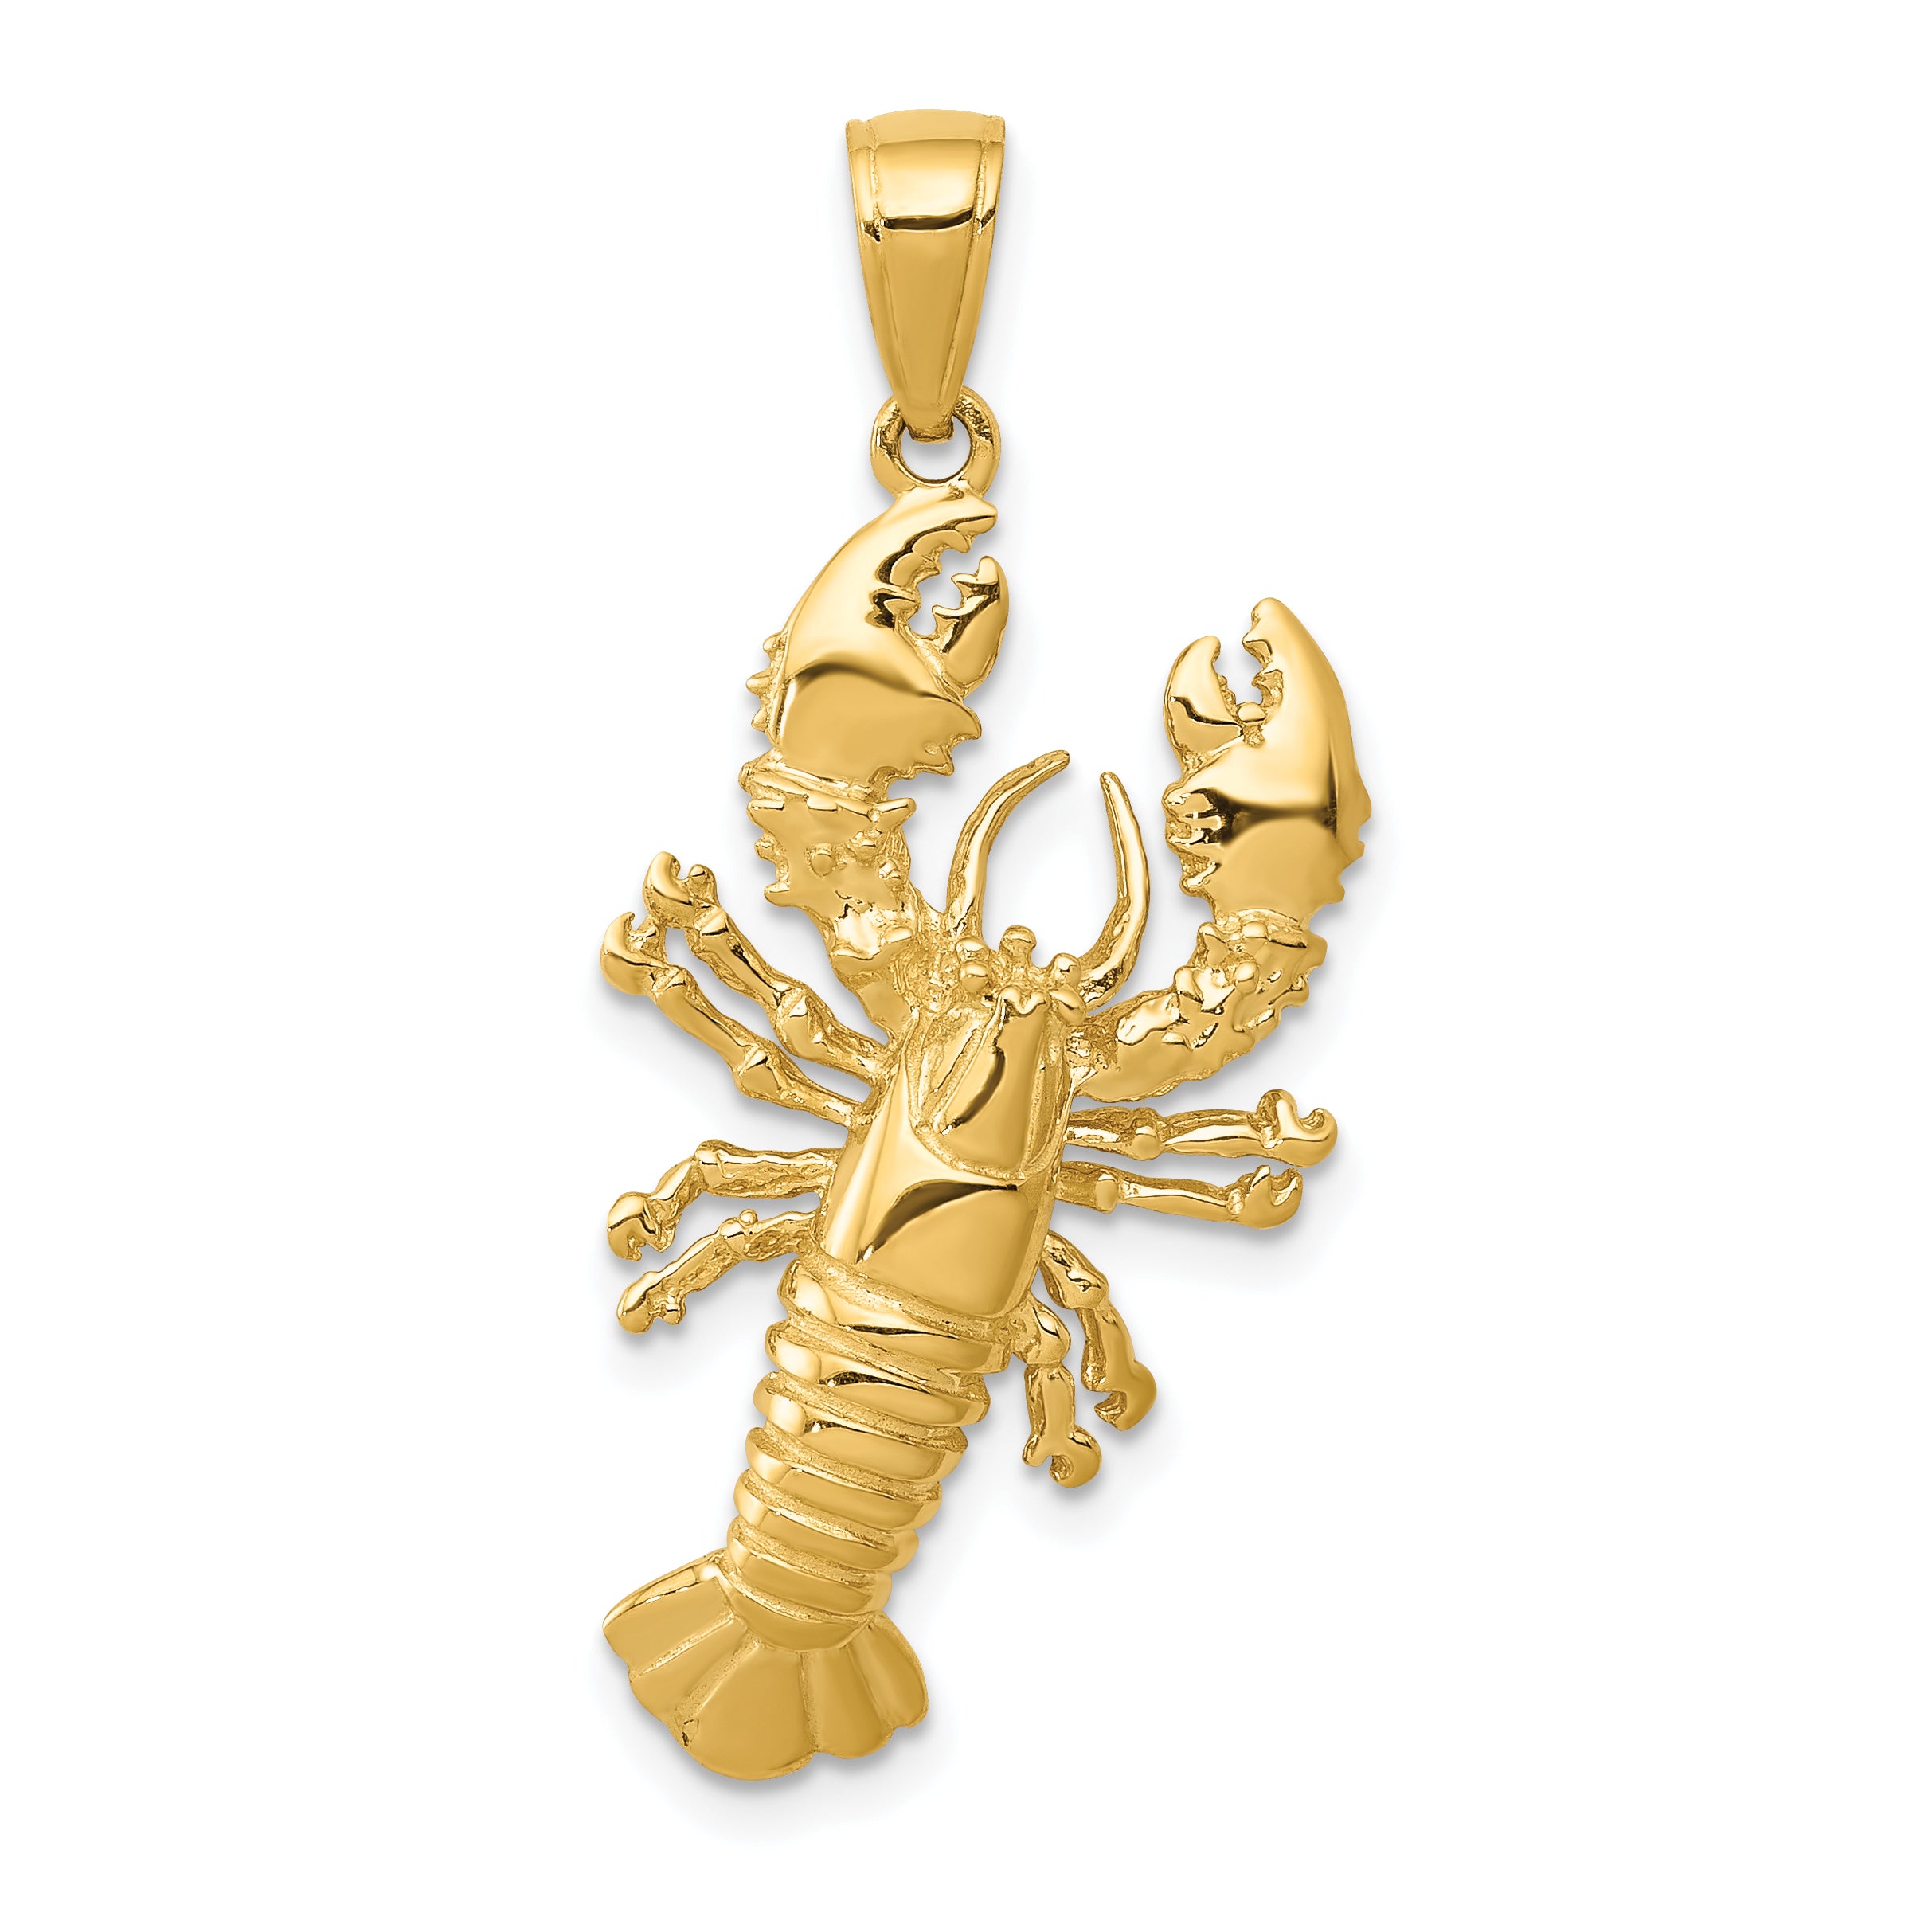 10k Lobster Pendant